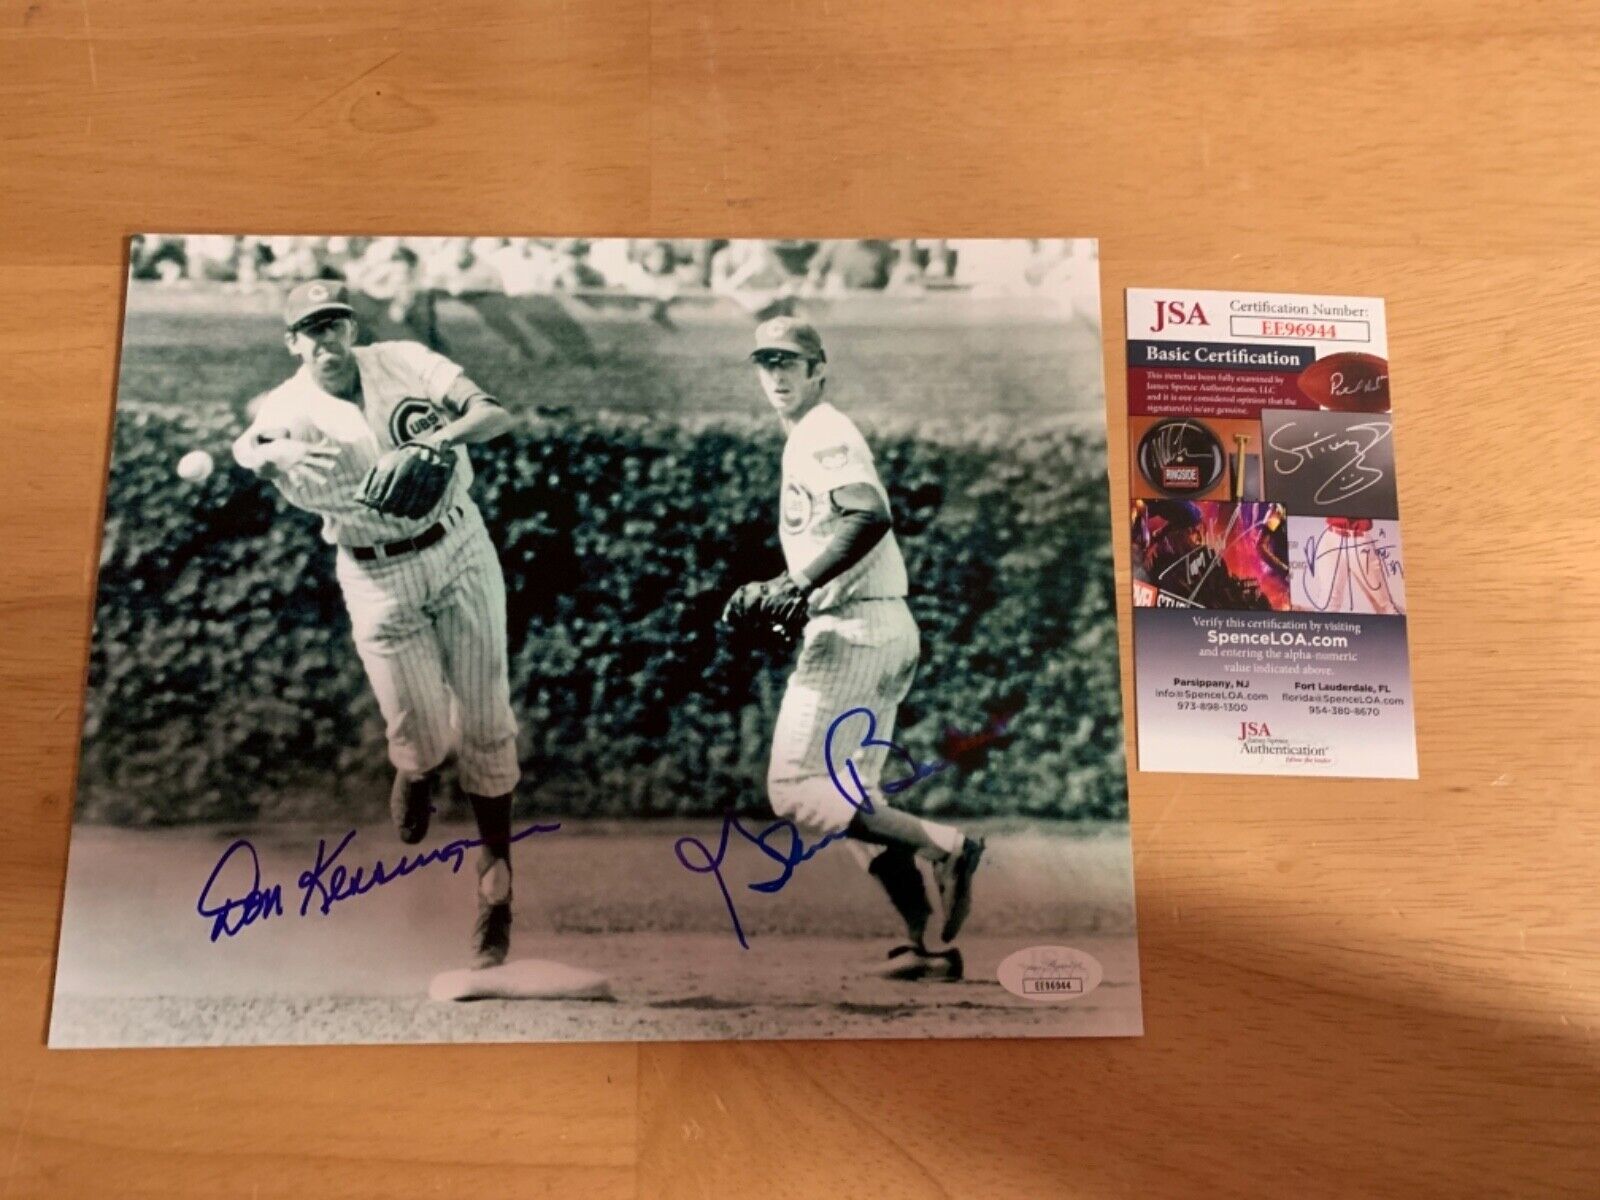 Don Kessinger & Glenn Beckert Autographed Photo JSA Authentication Baseball